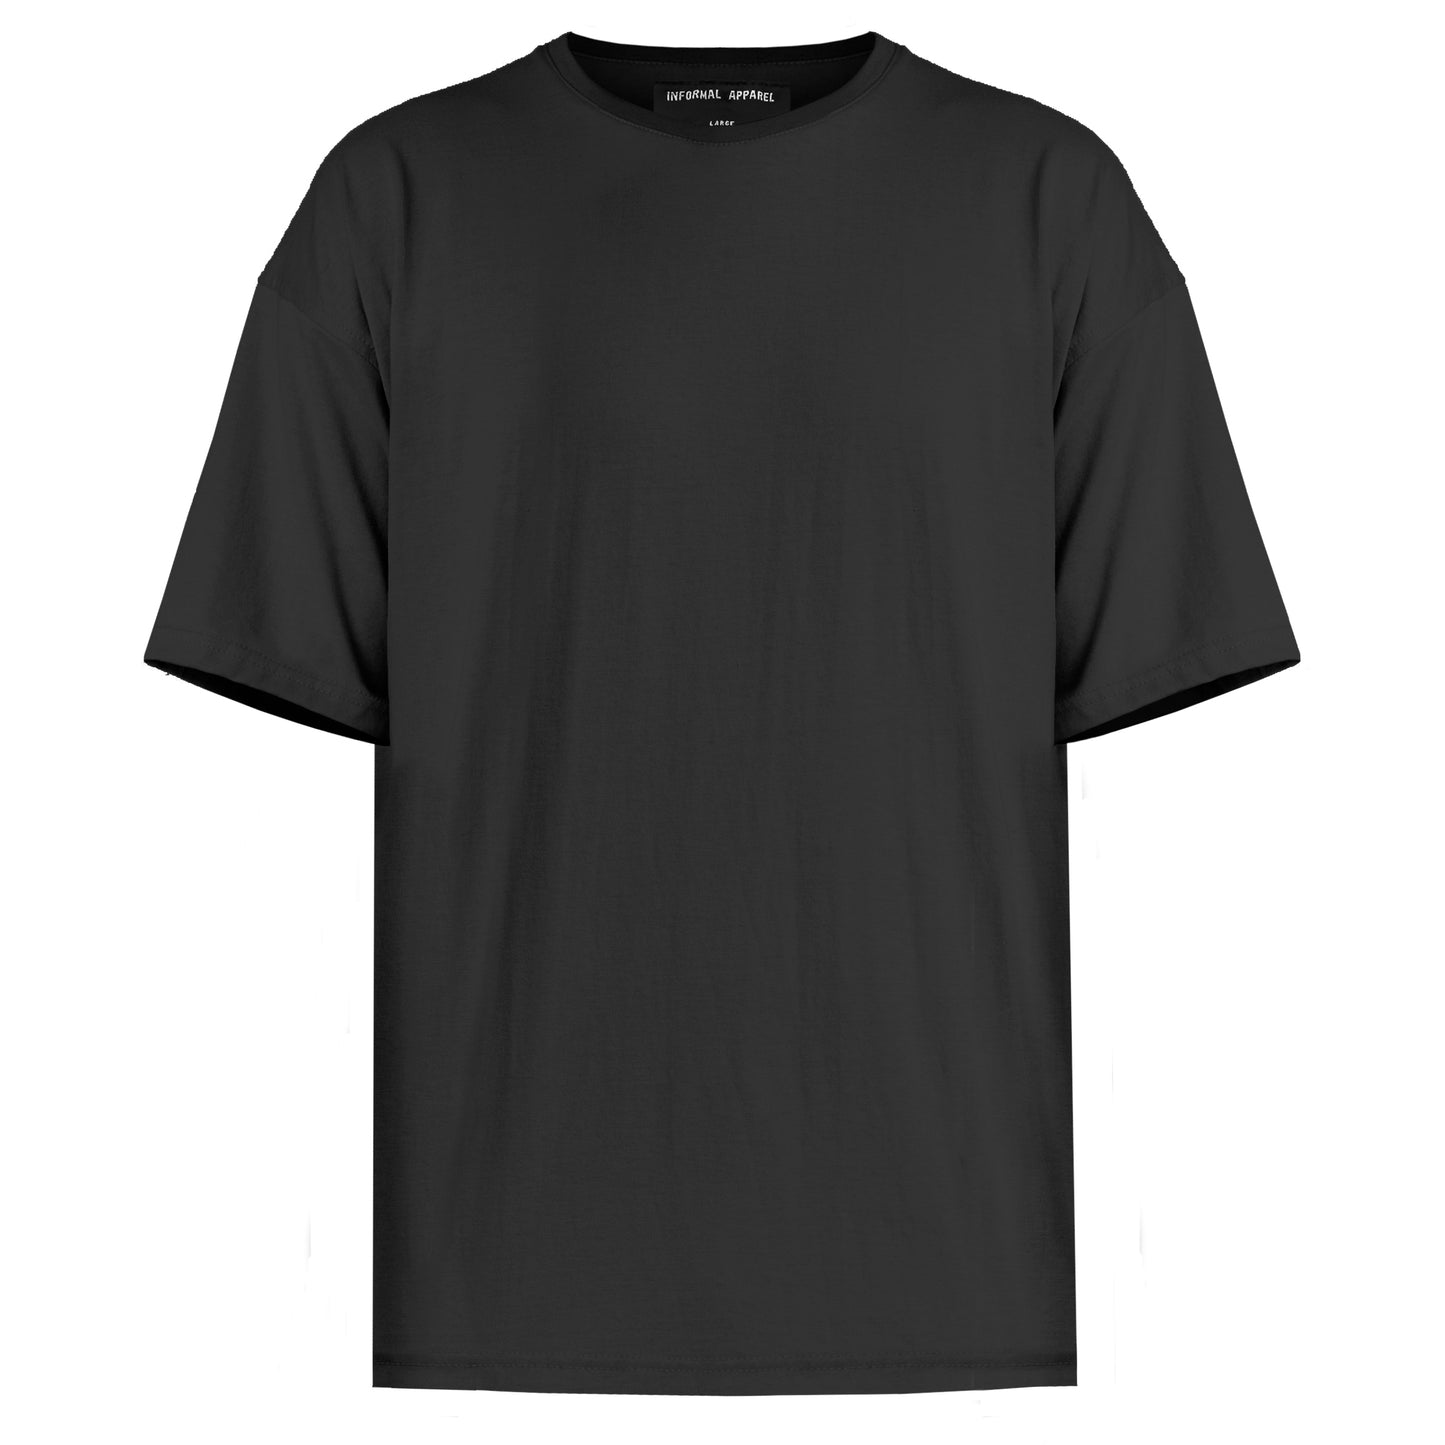 Spine T-shirt : Black